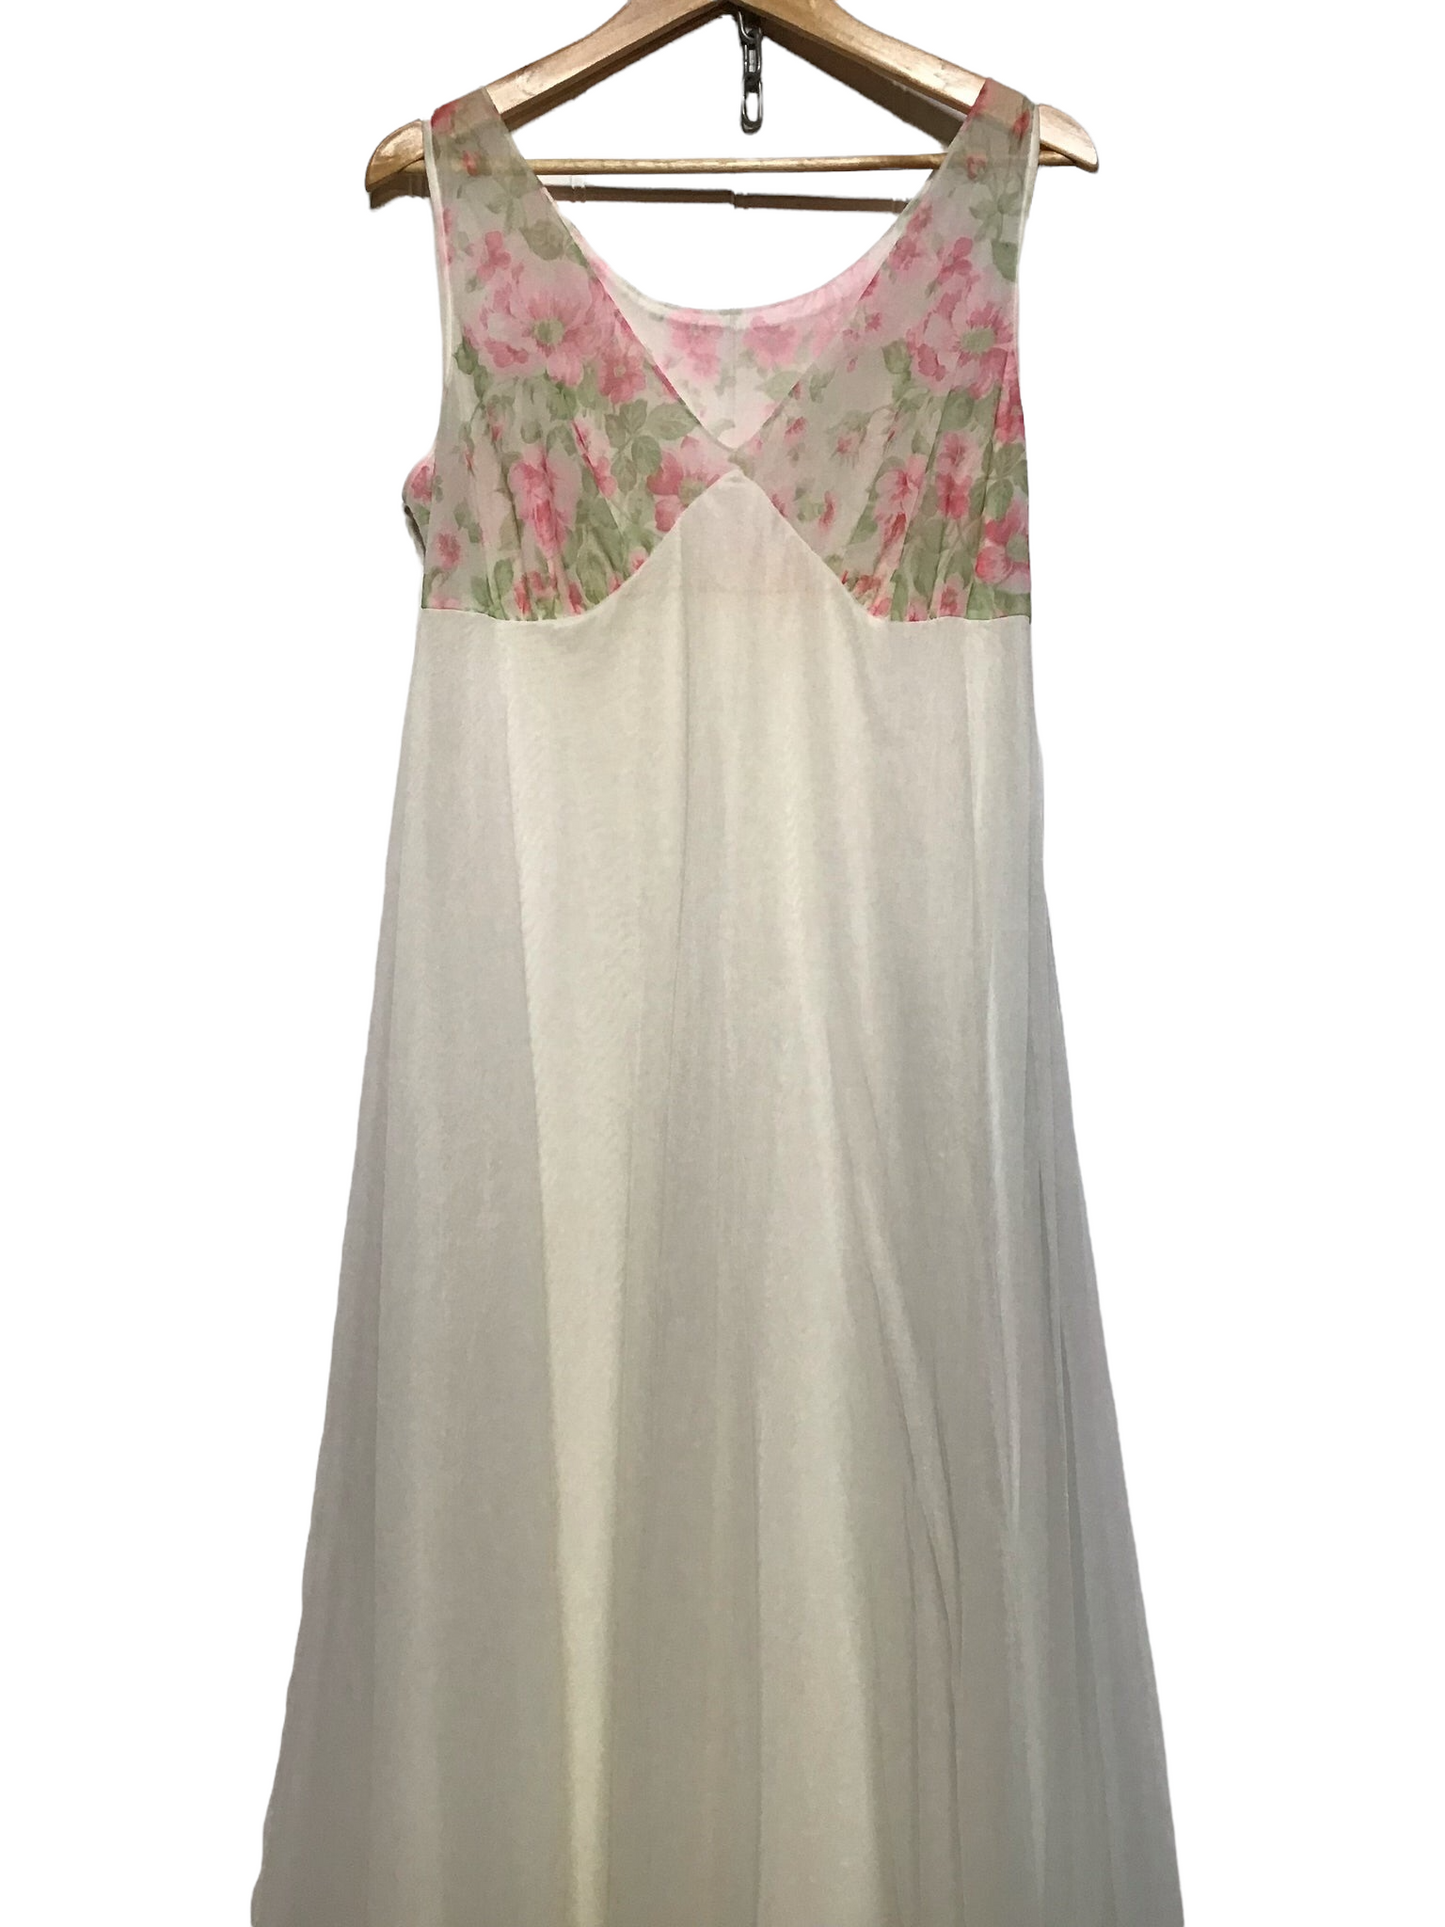 Rose Patterned Sheer Long Dress (Size XXL)